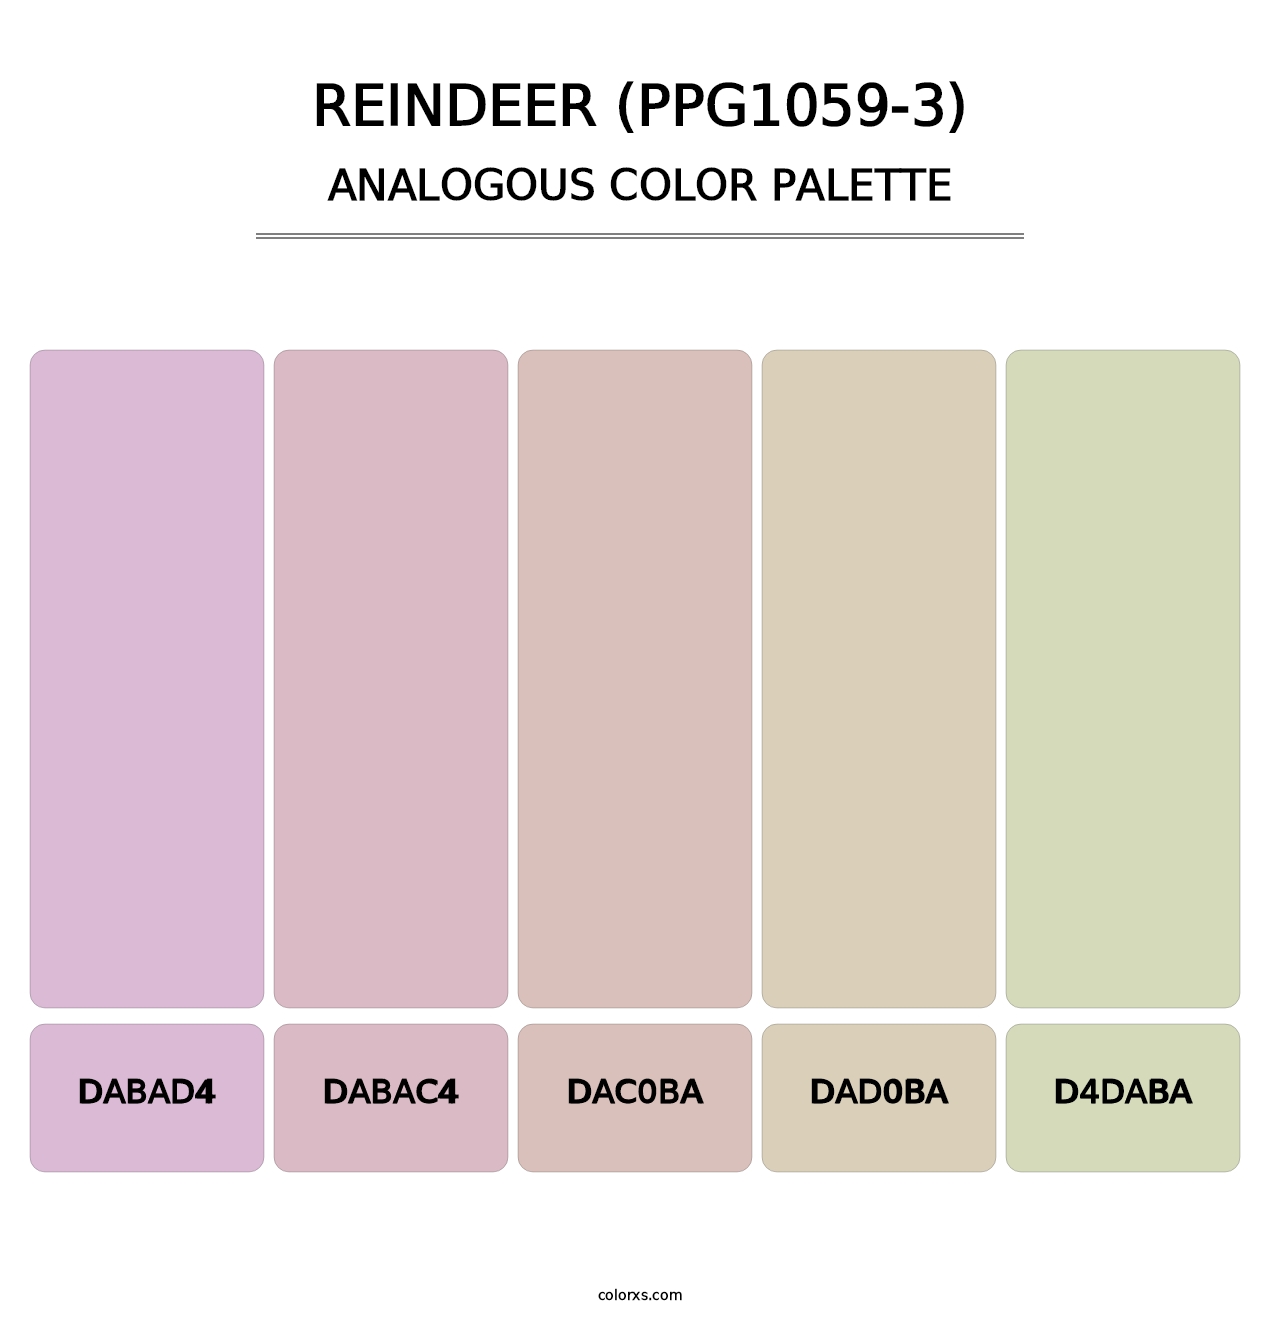 Reindeer (PPG1059-3) - Analogous Color Palette